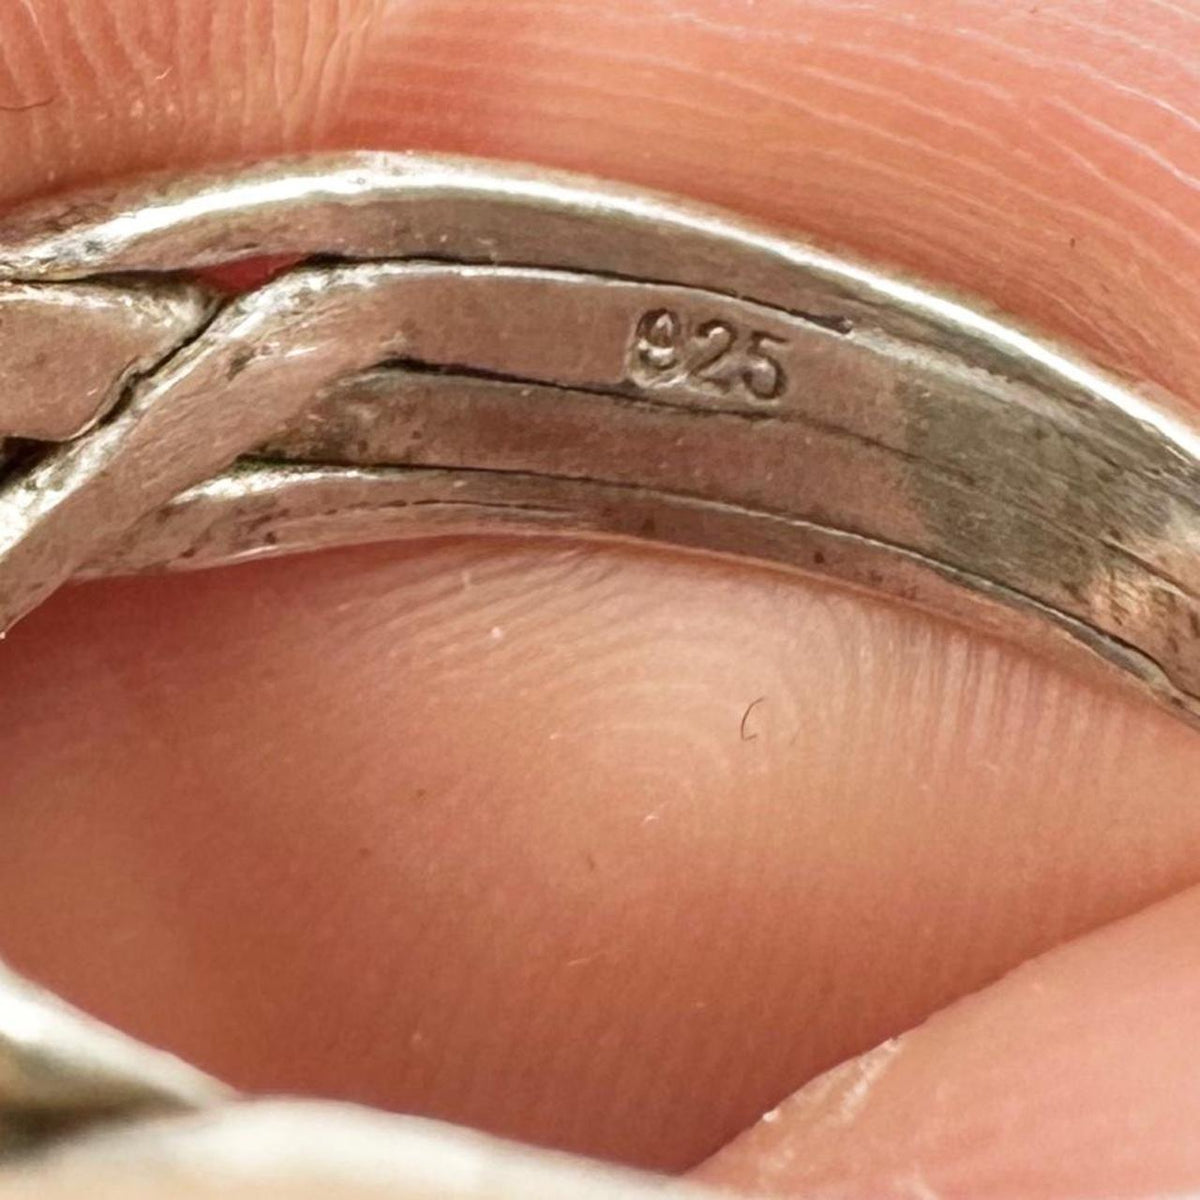 Vintage Braid 925 Sterling Silver Ring